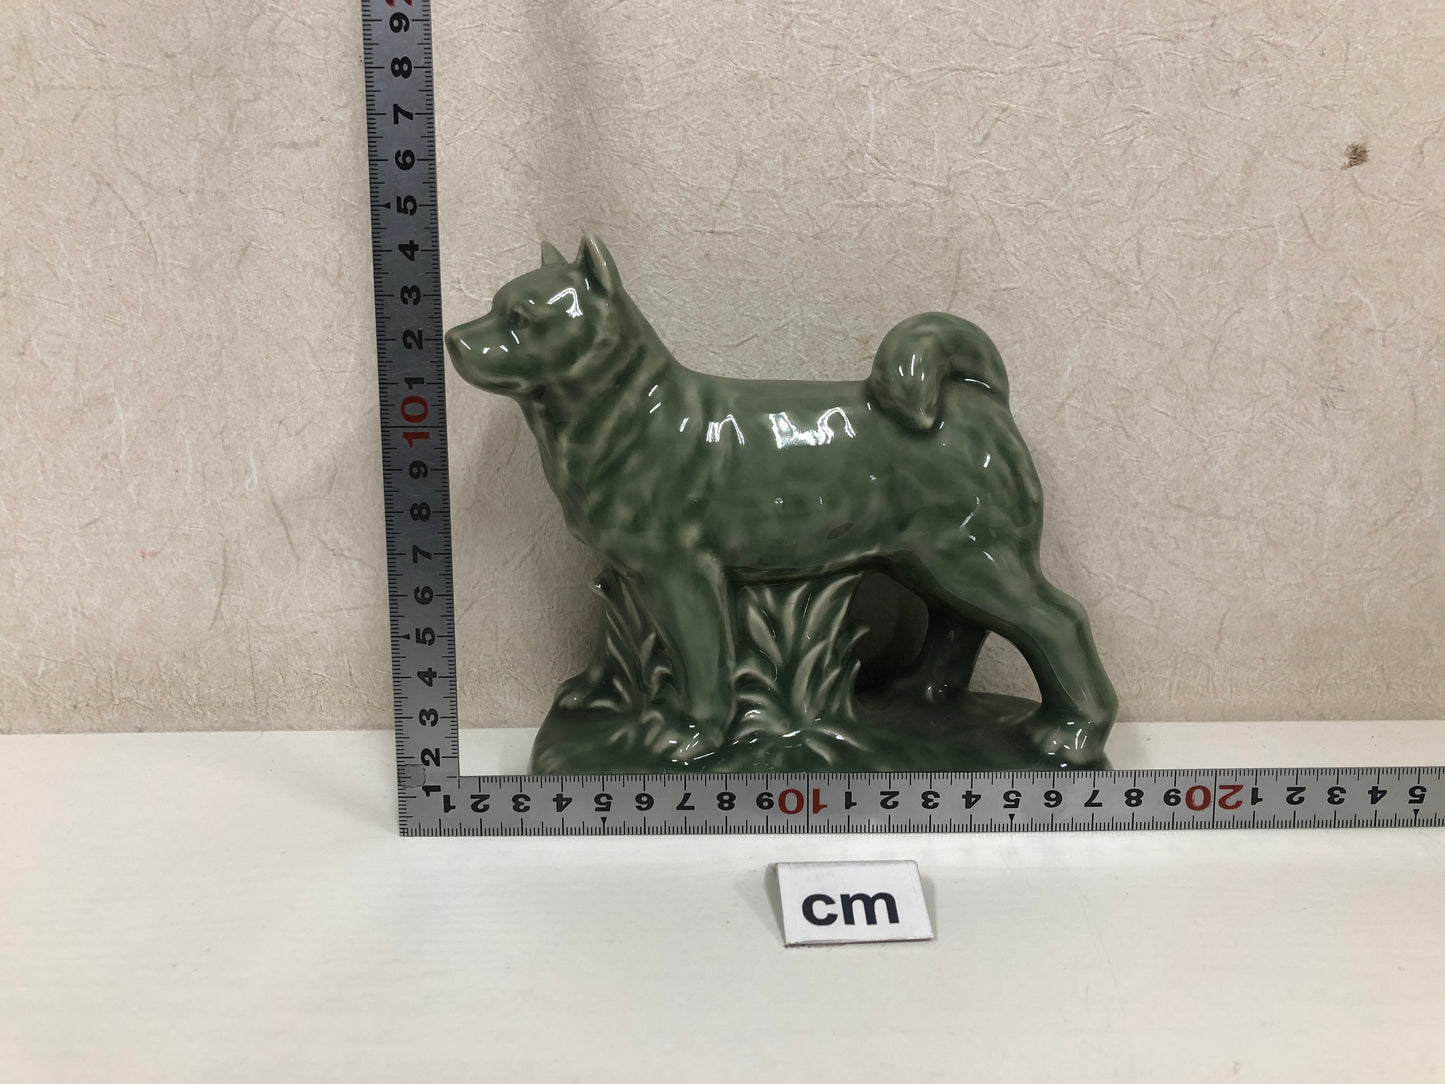 Y4090 OKIMONO Celadon Dog figure ceramic figurine Japan antique vintage decor